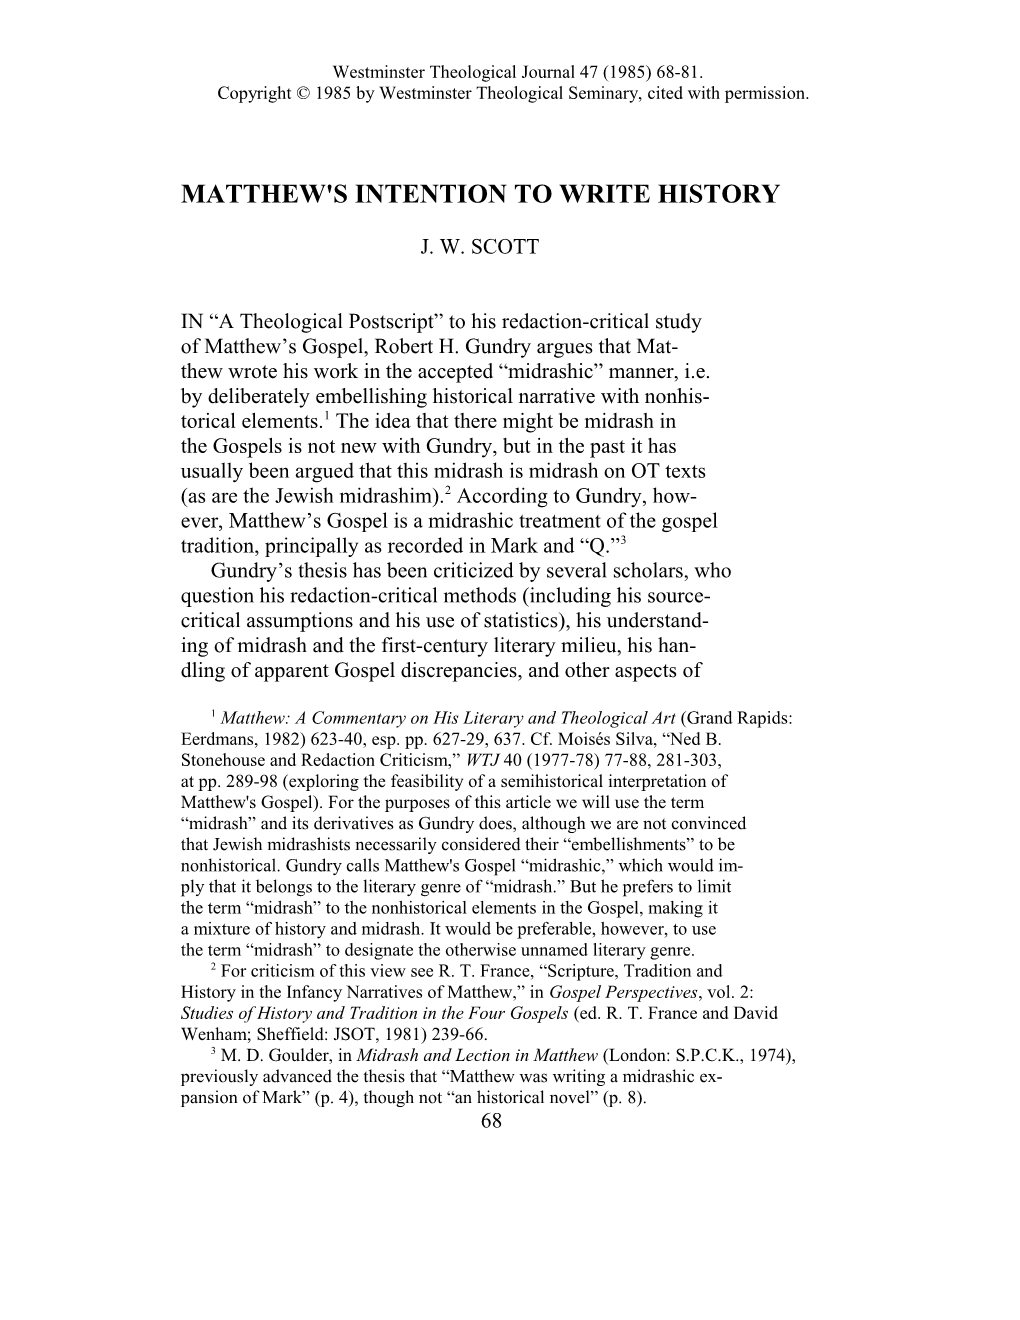 Matthew's Intention to Write History